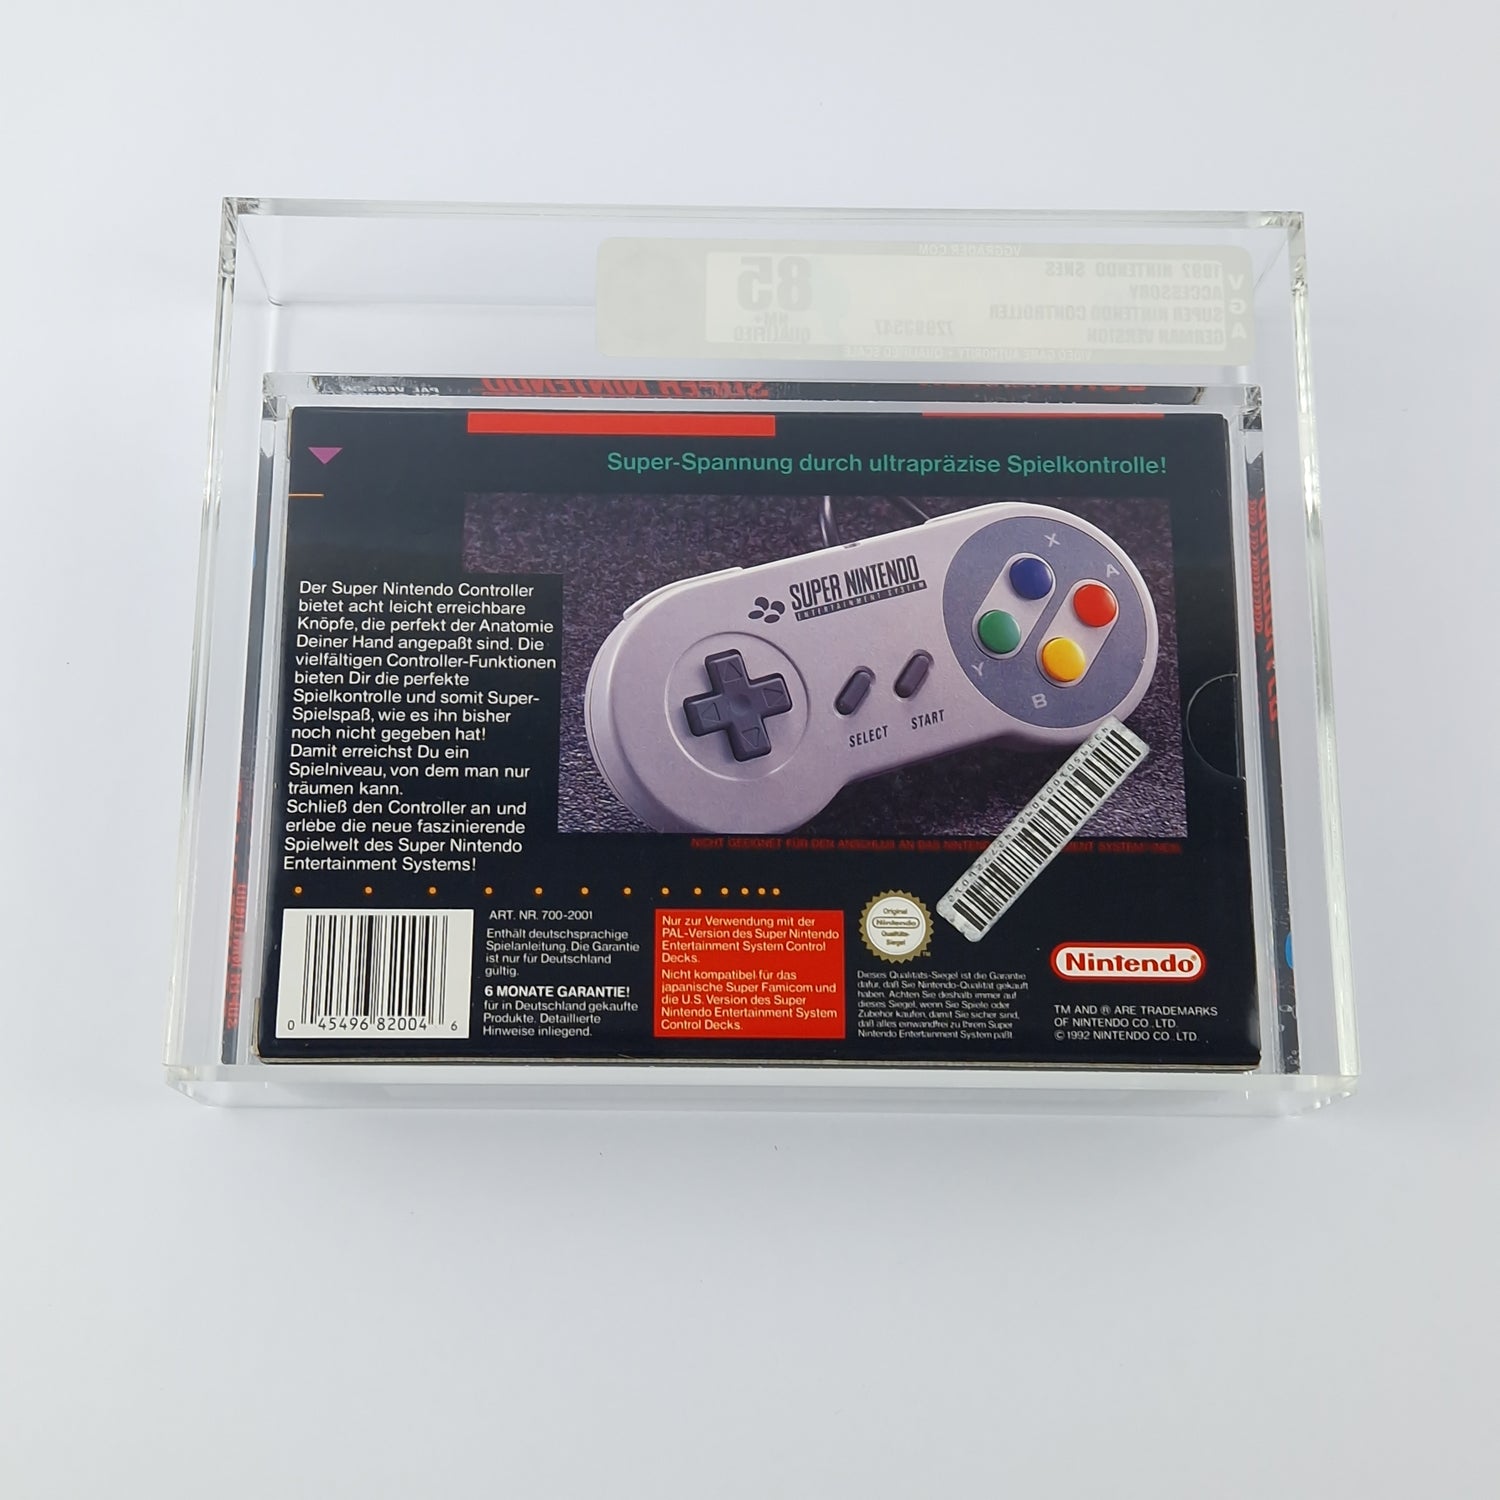 Super Nintendo Accessories: Controller / Gamepad - OVP NEW NEW - VGA 85 Qualified